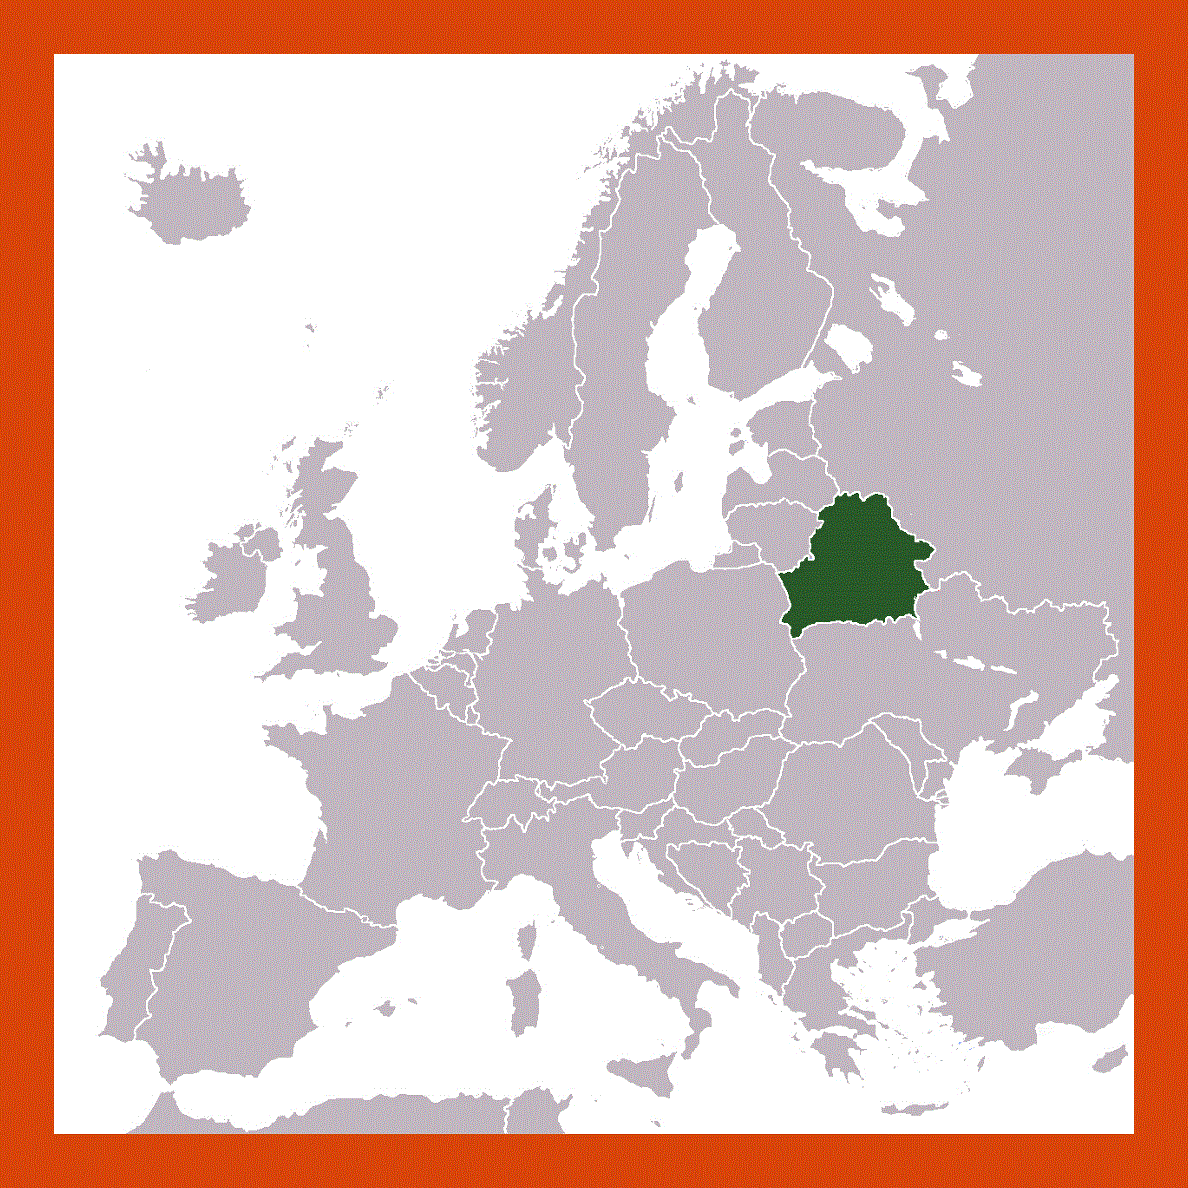 Location map of Belarus in Europe